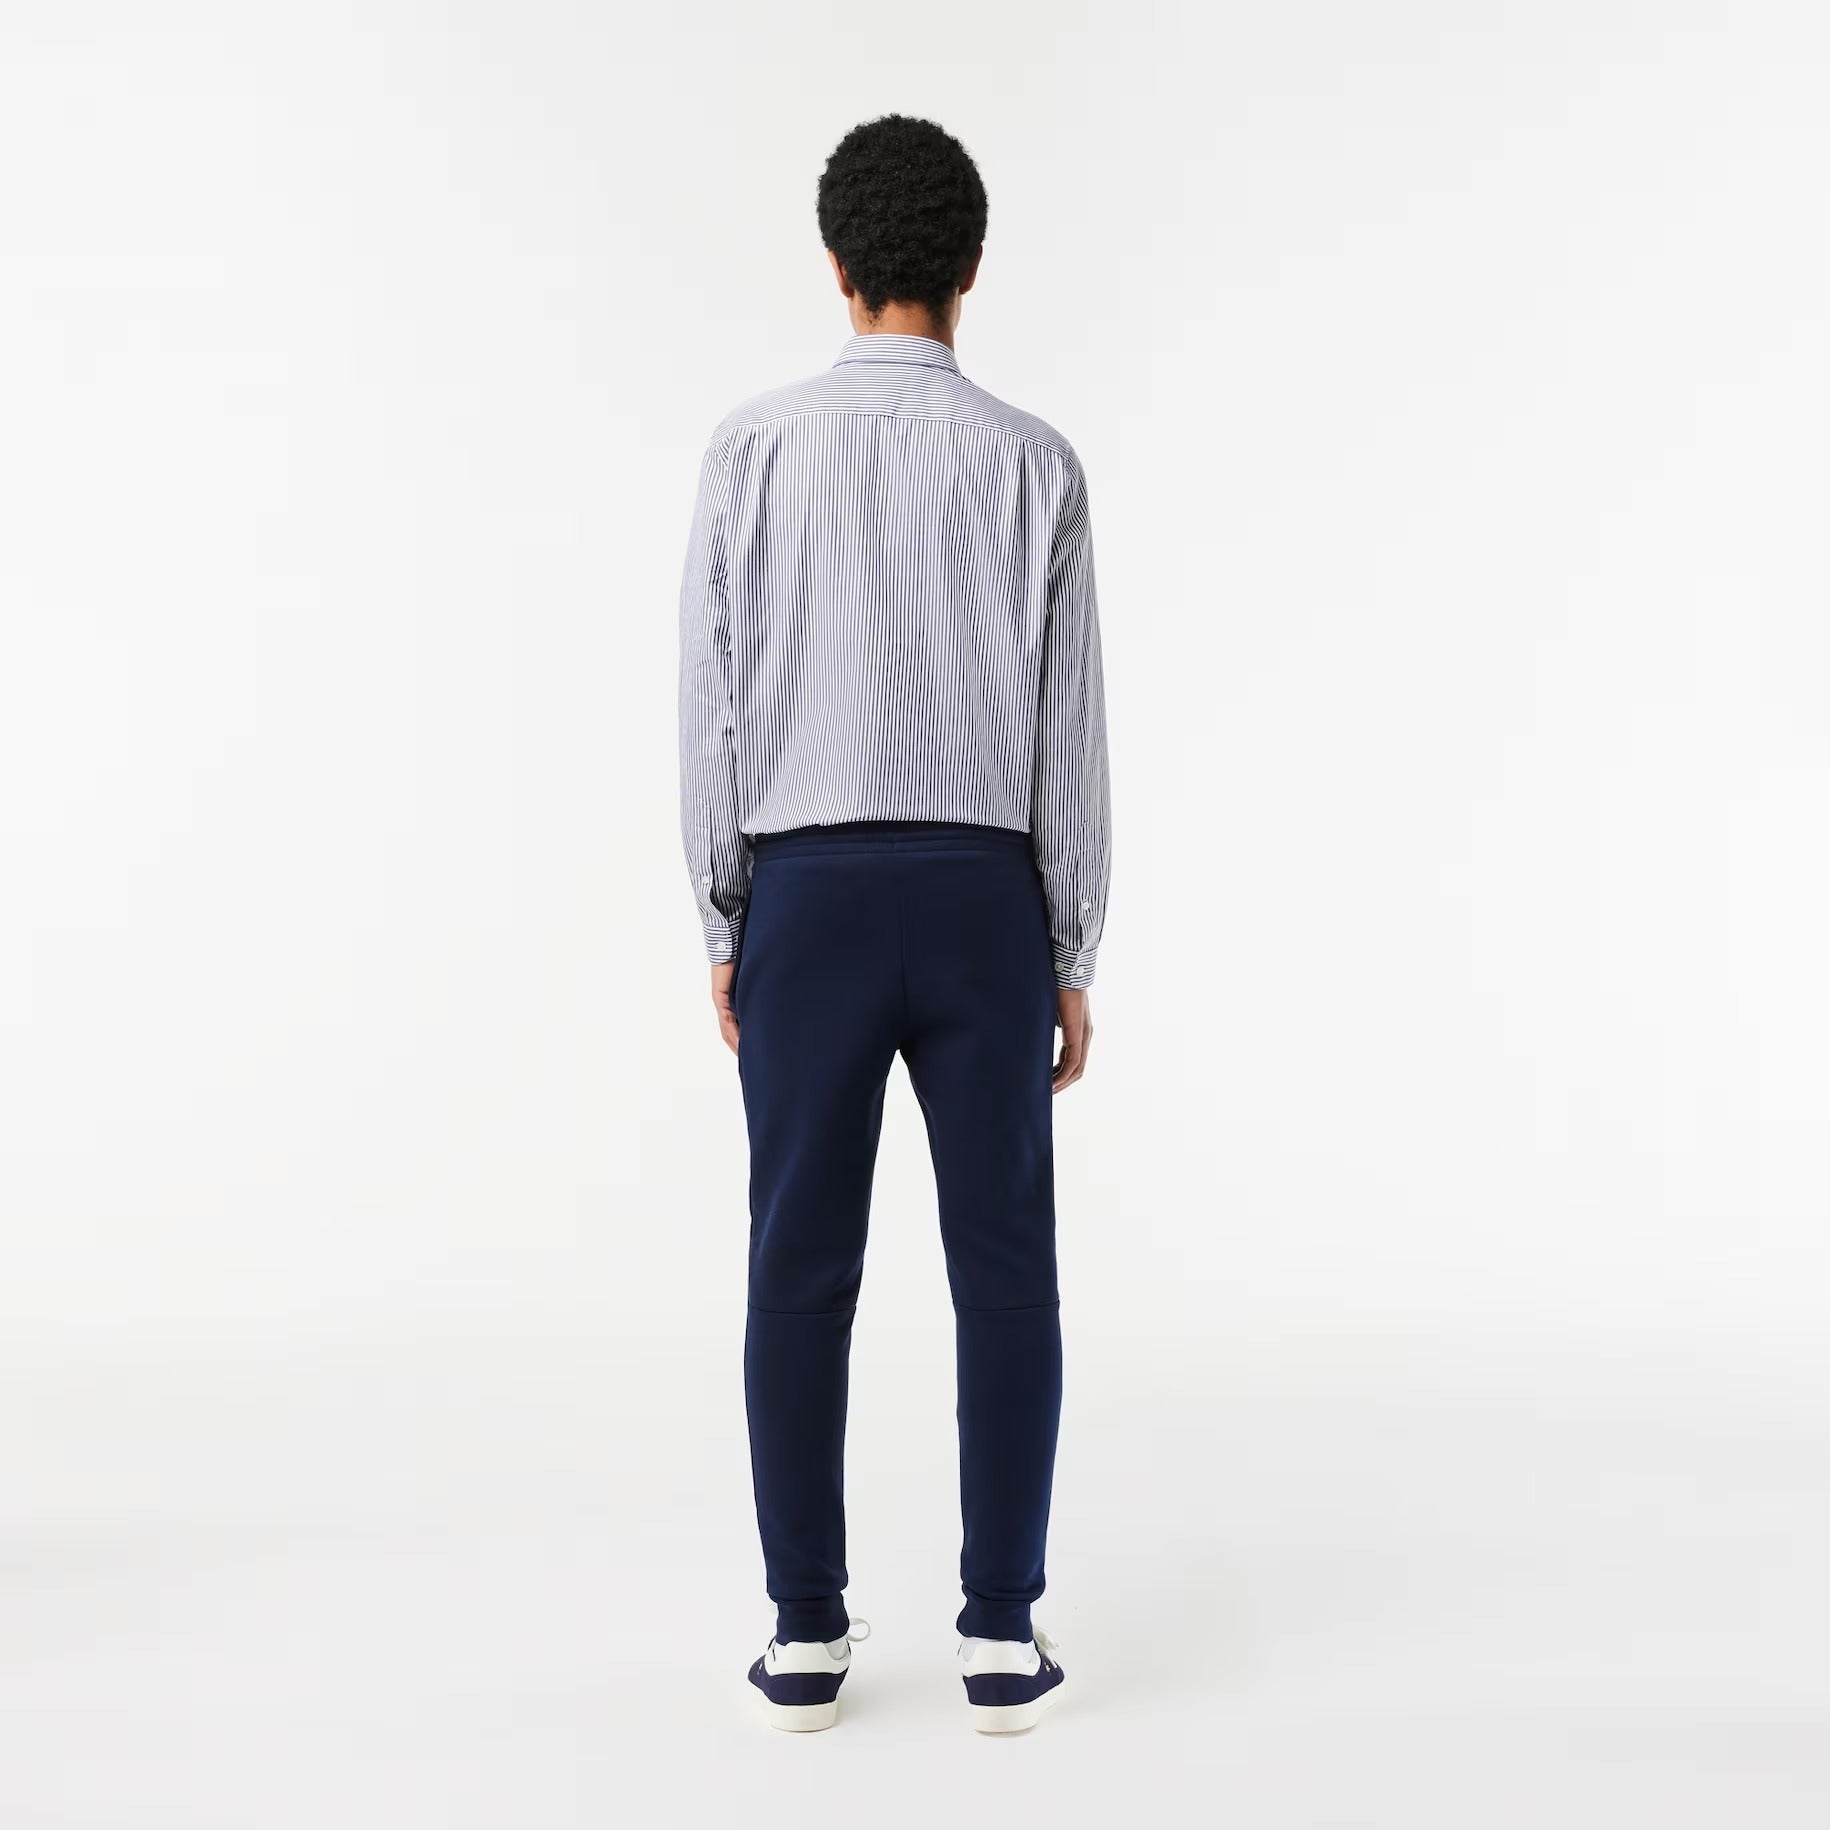 Pantalone in Tuta con Logo / Blu - Ideal Moda